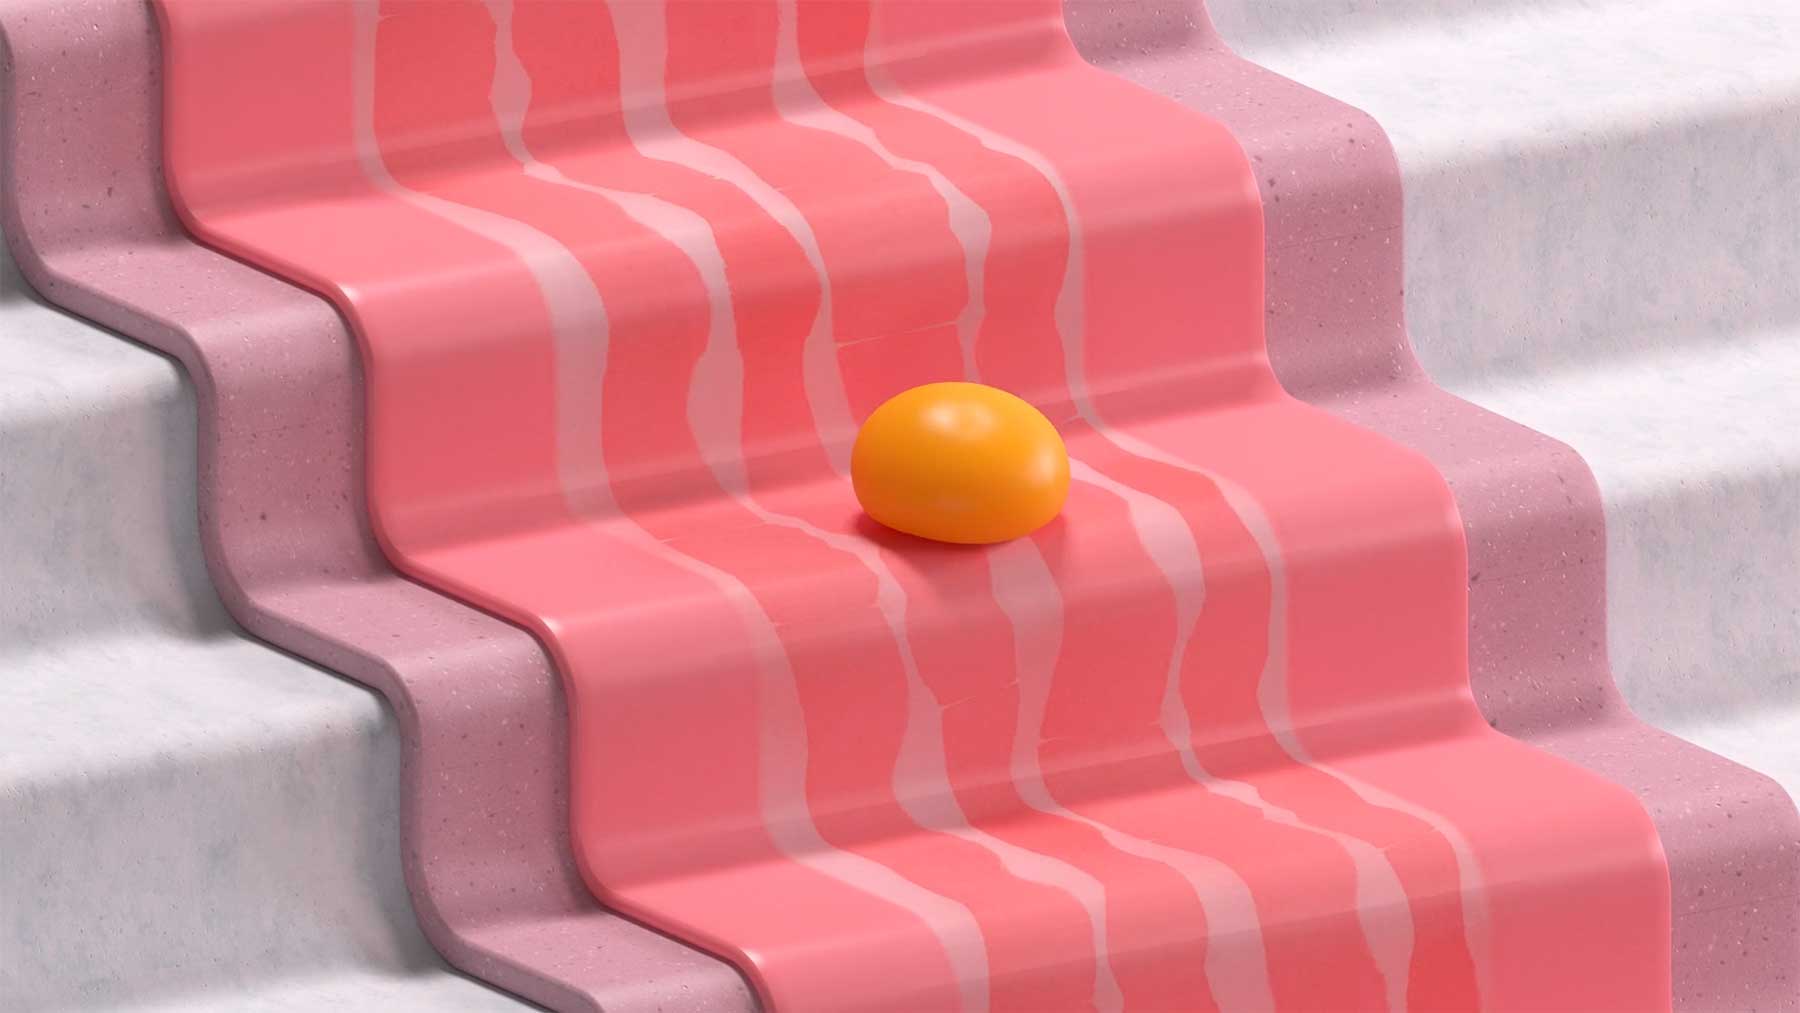 Abstrakt animierter Egg McMuffin egg-mcmuffin-surreal-animation 